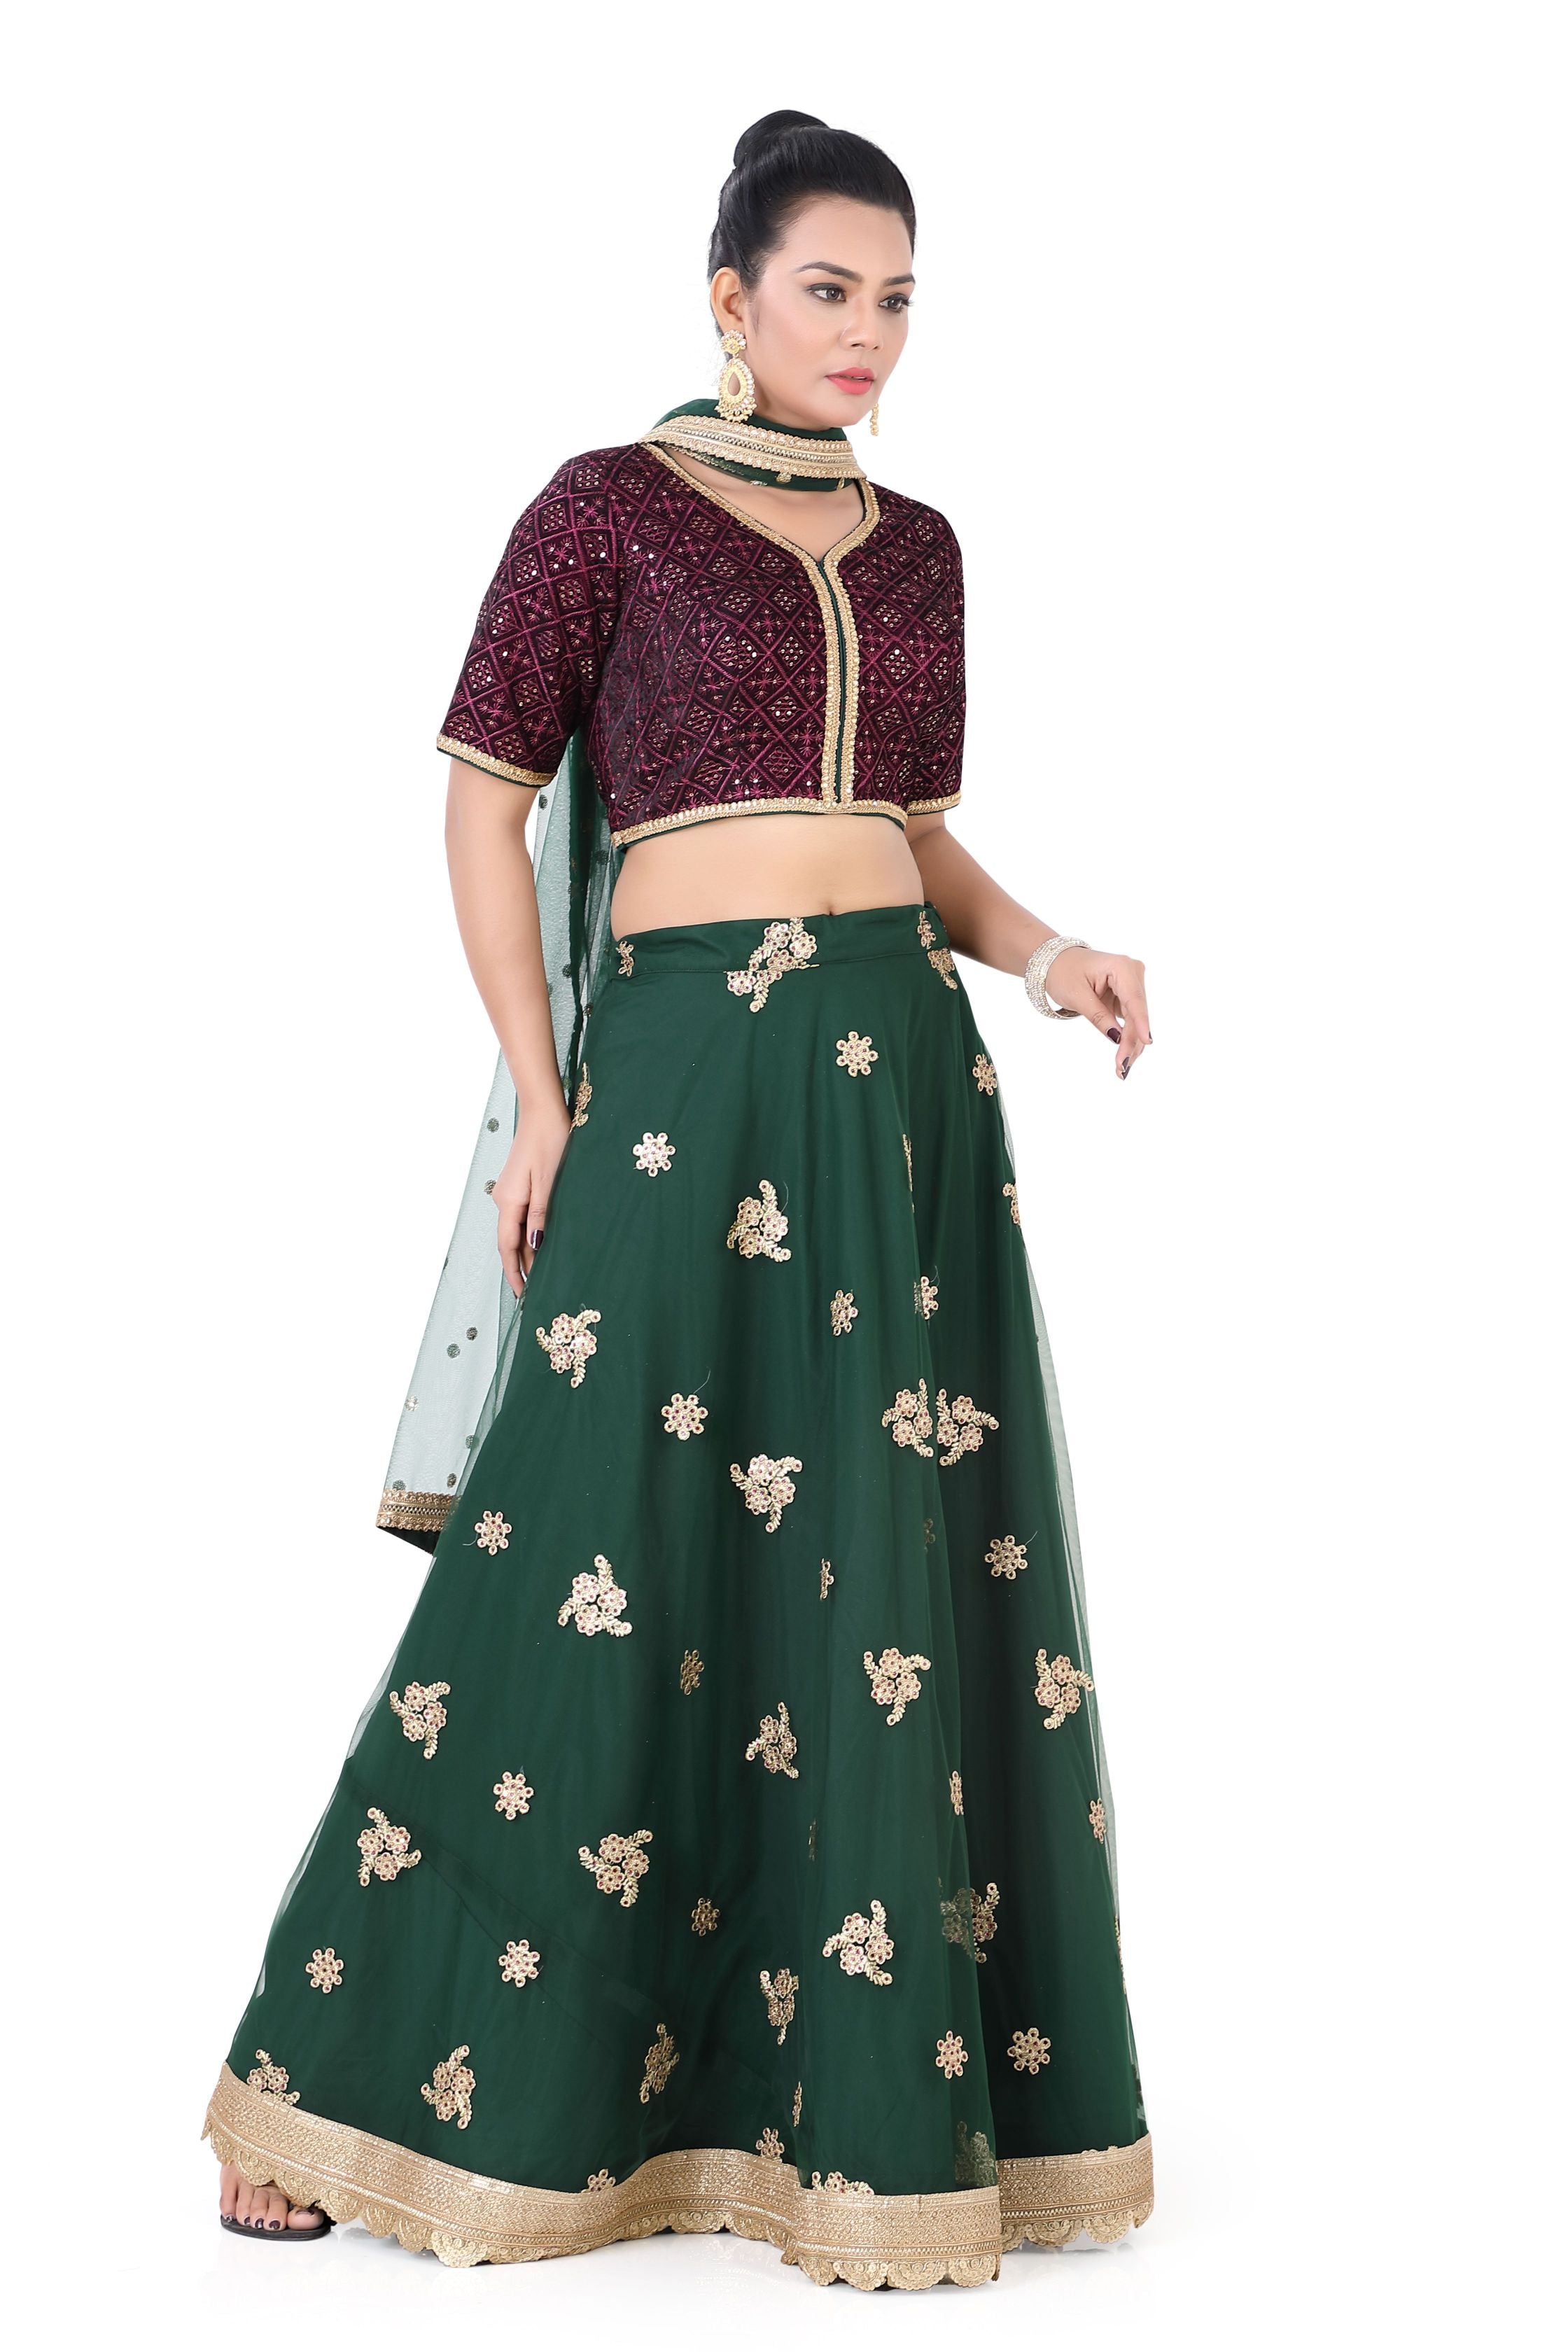 Banarasi Brocade Party Wear Green Lehenga Choli